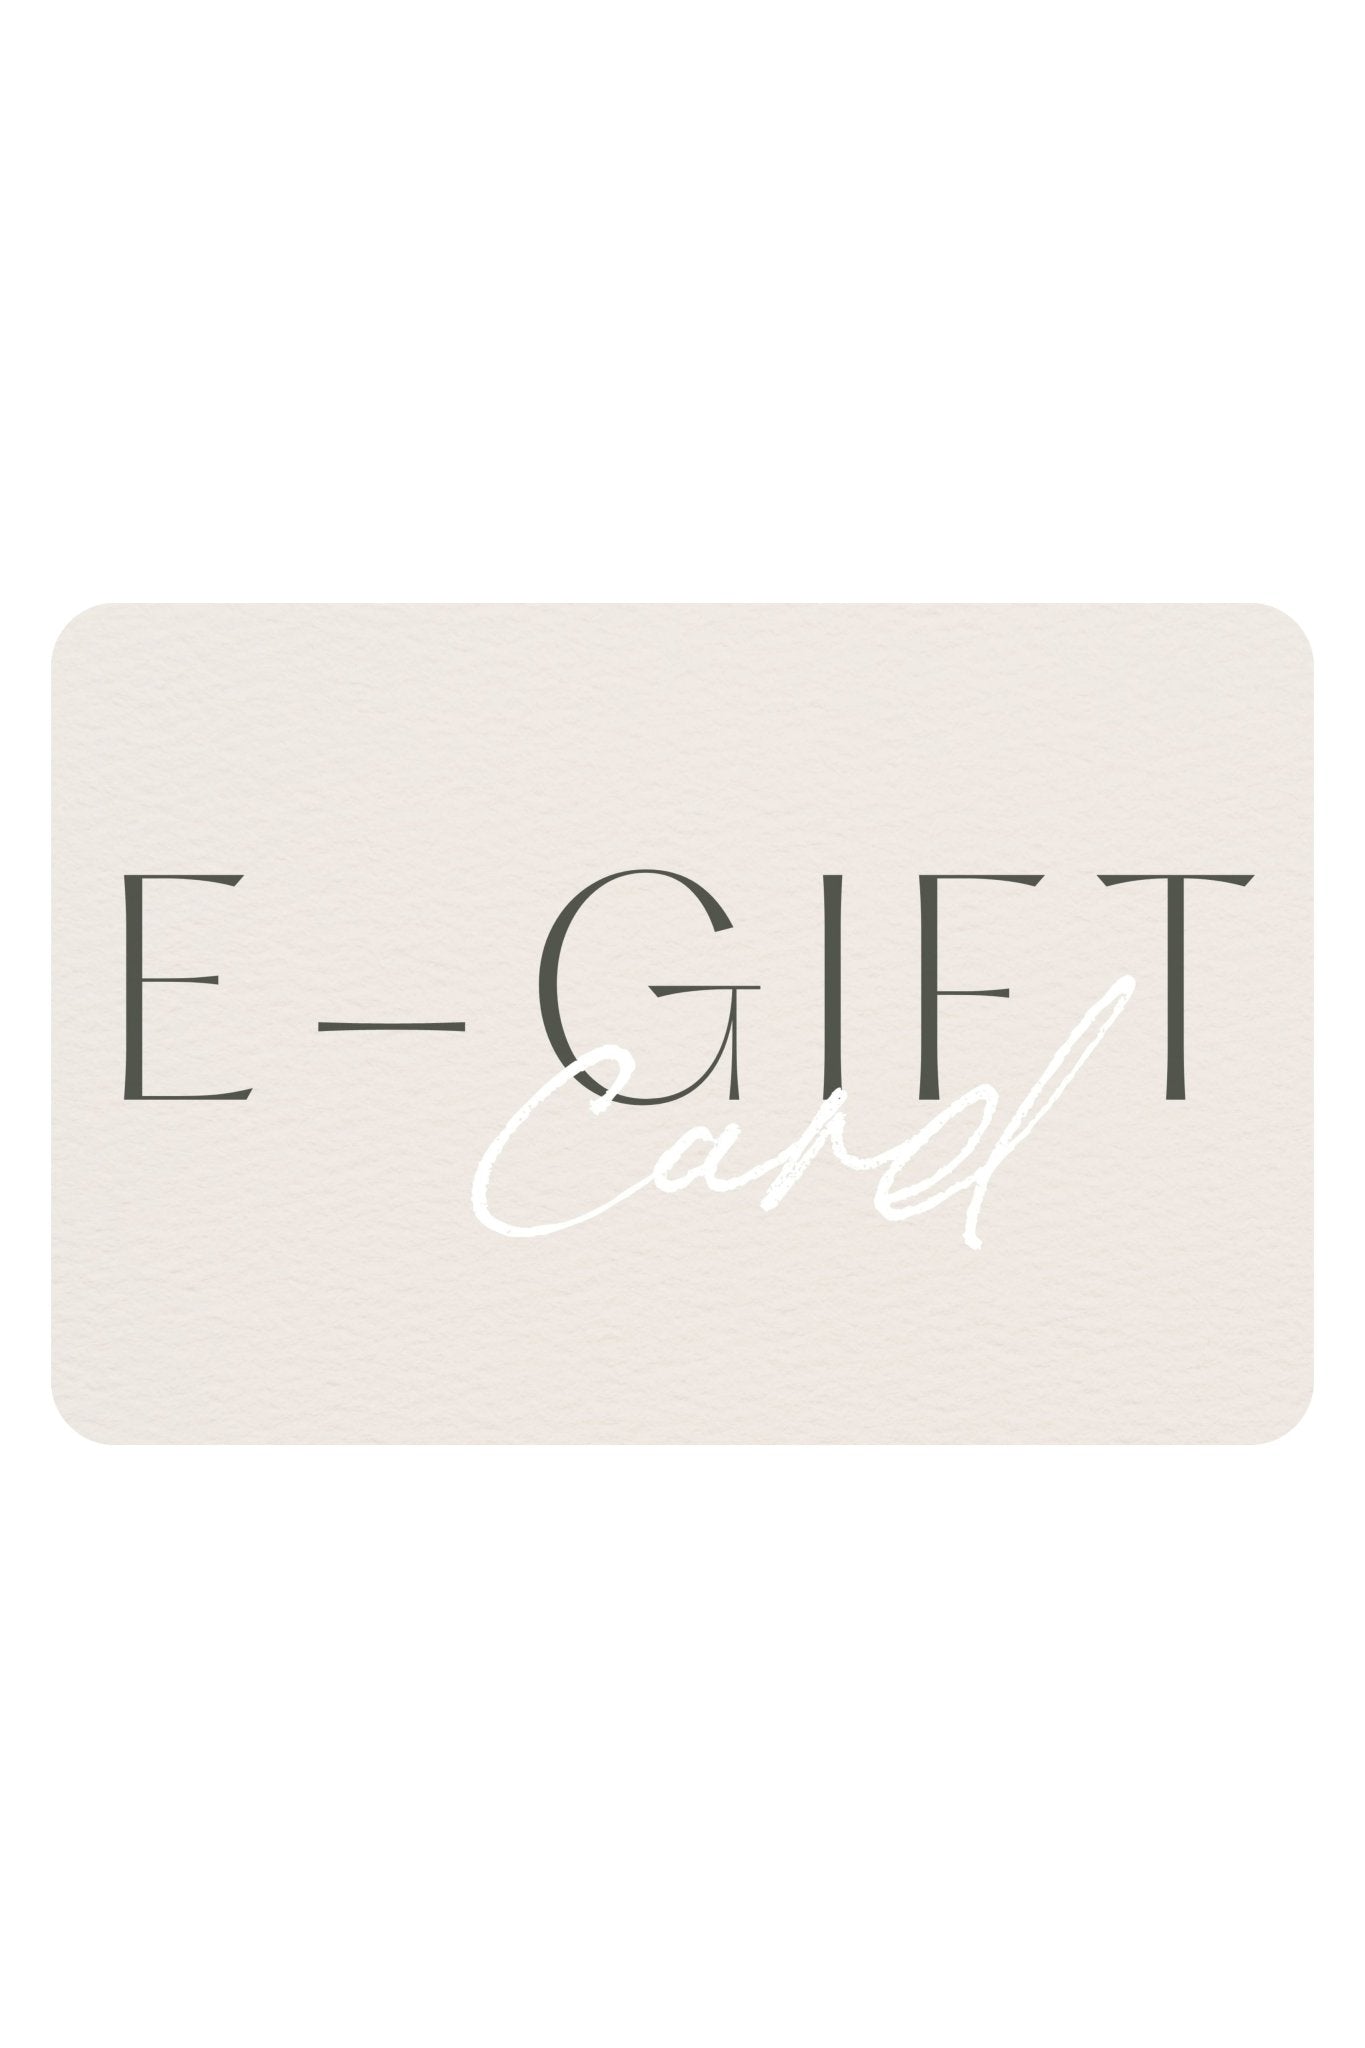   eGift Card -  Logo: Gift Cards